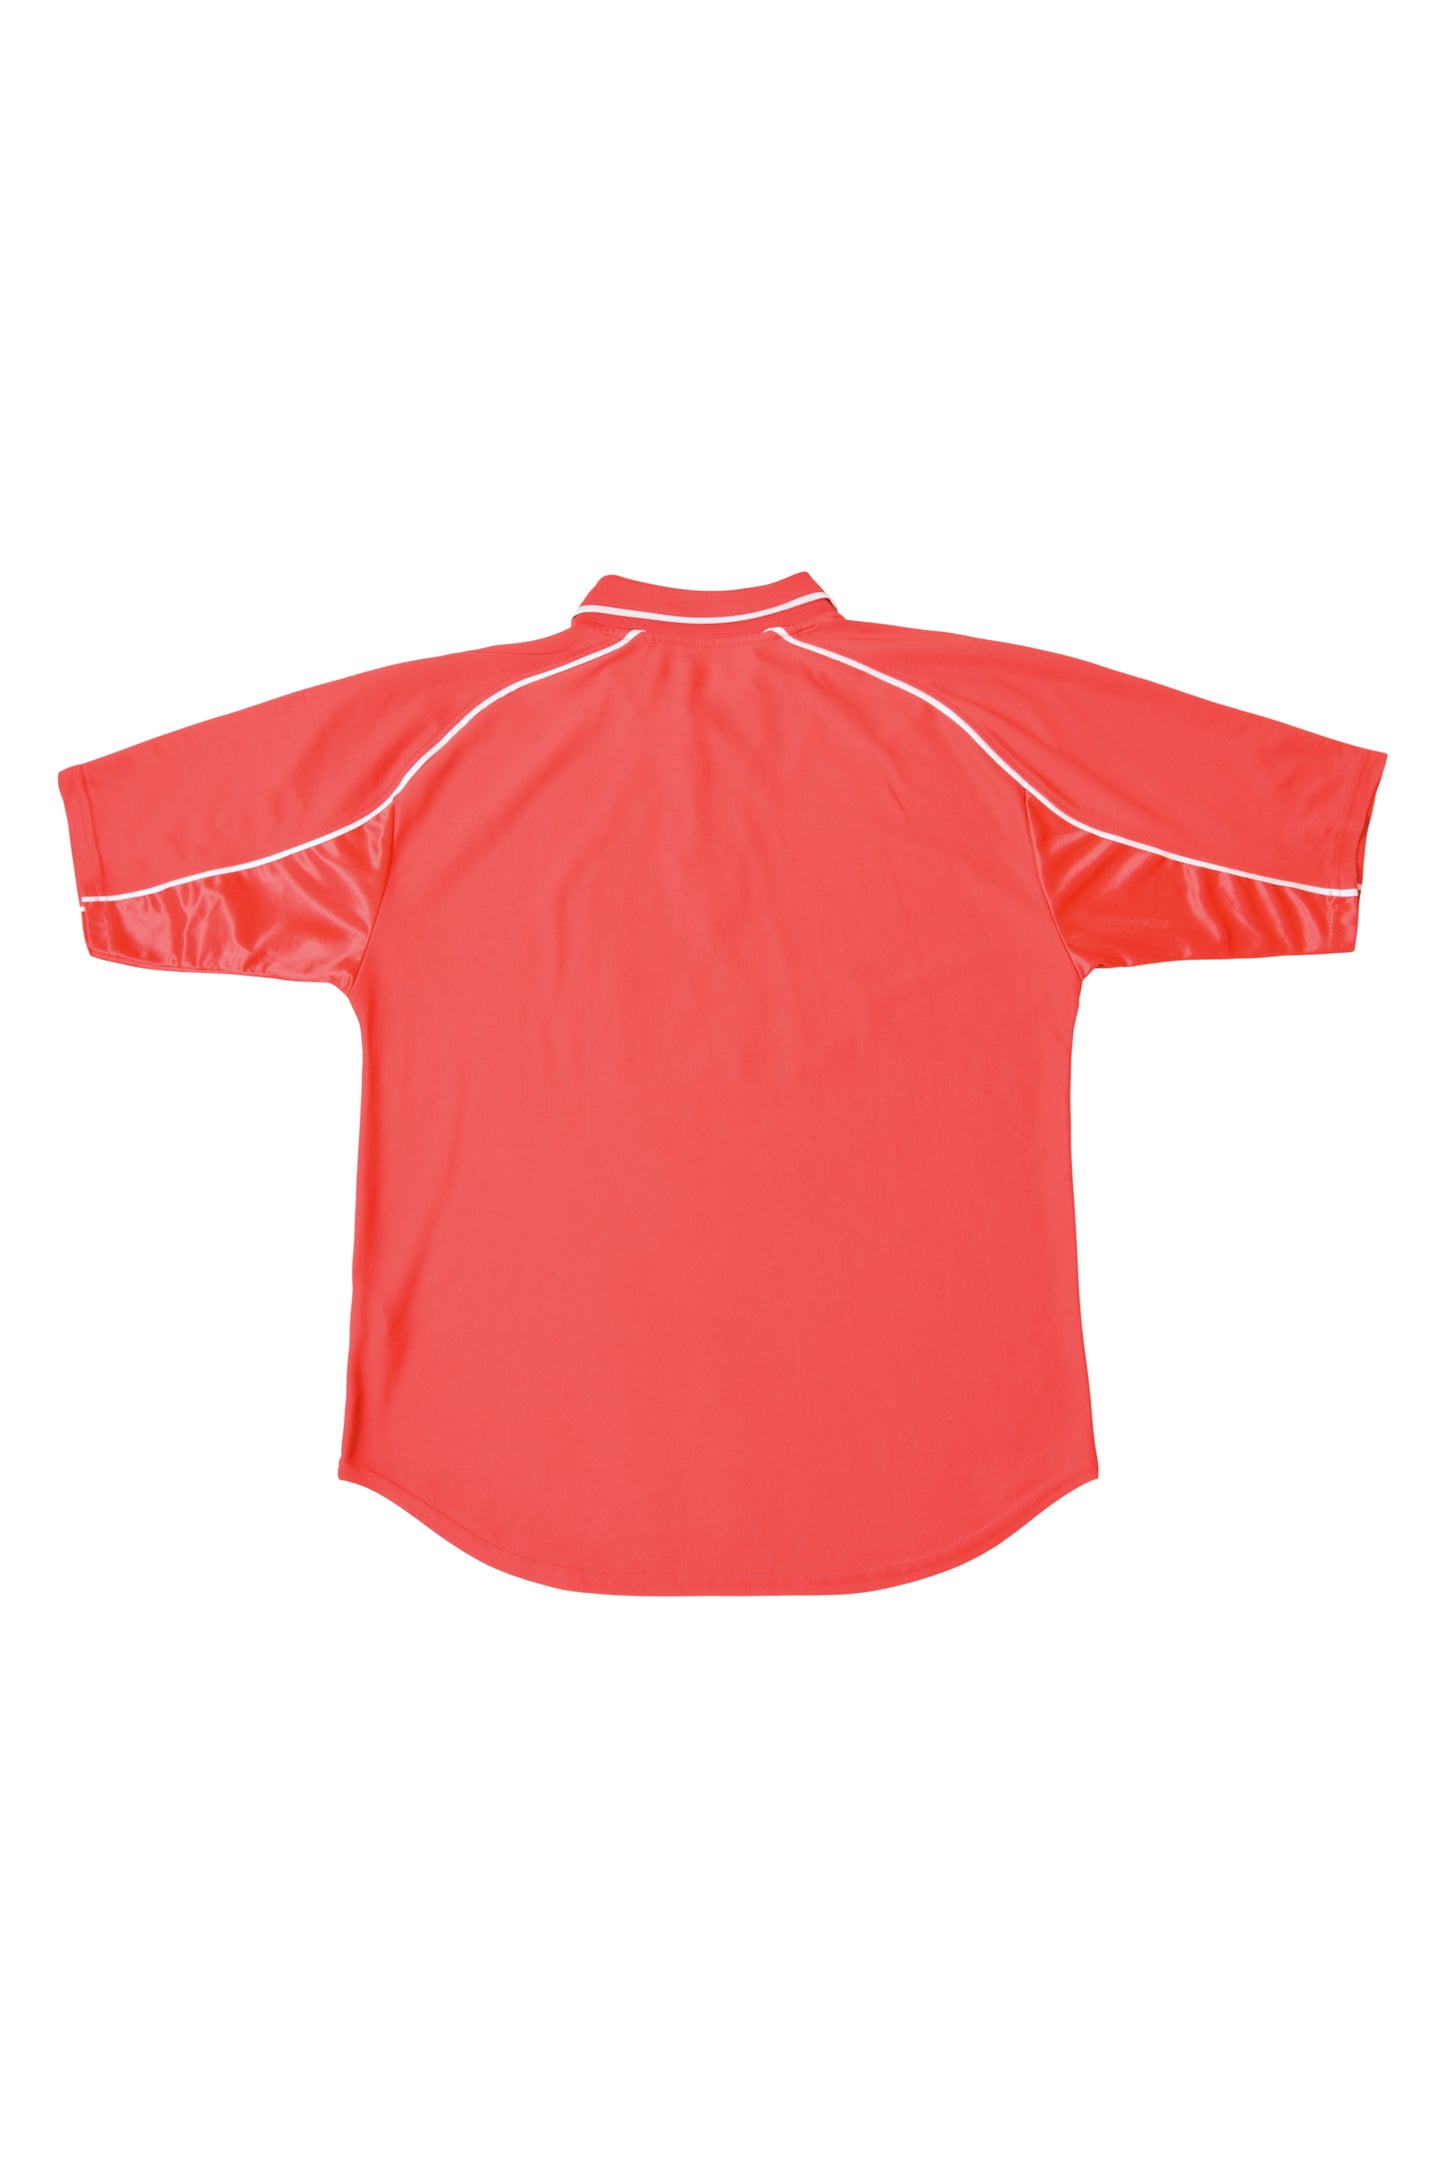 Liverpool Reebok 2000-02 Home Football Shirt Red Carlsberg